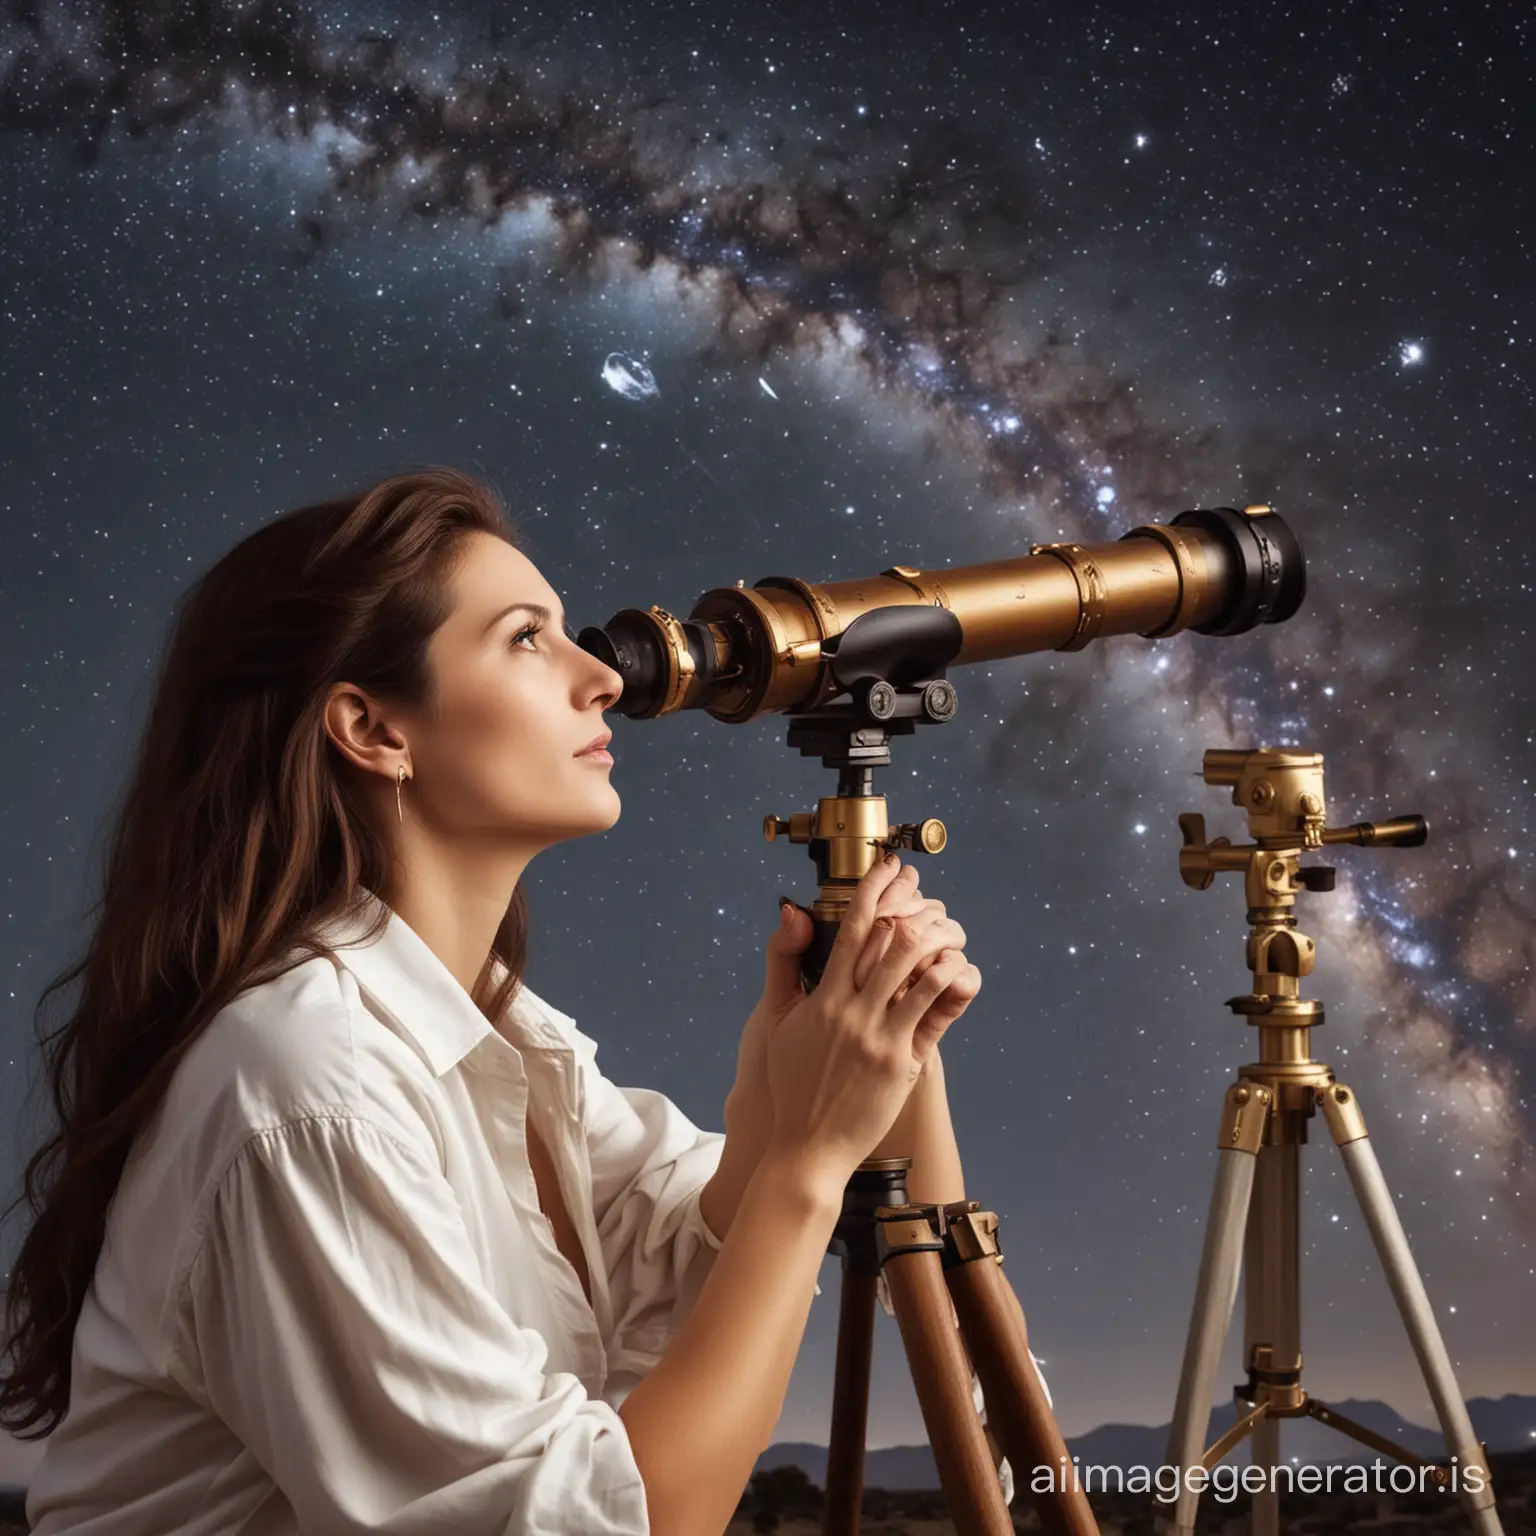 Female-Astrologer-Observing-Zodiac-Signs-Through-Telescope